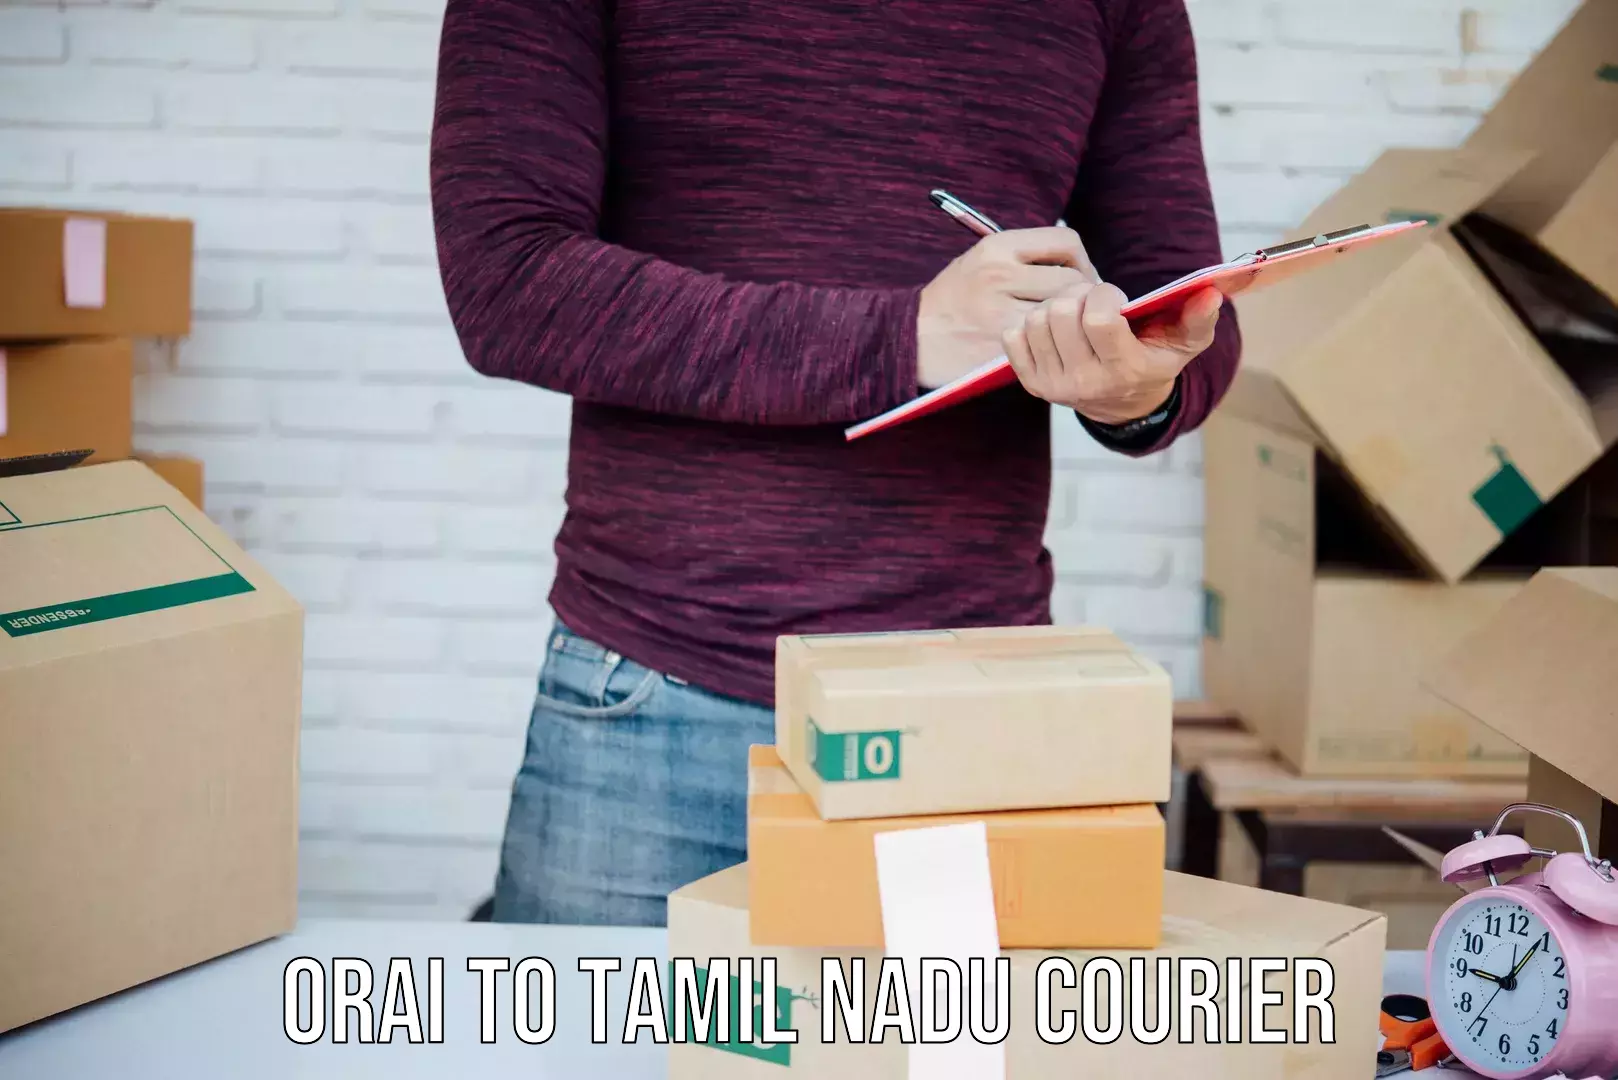 Courier insurance Orai to Tamil Nadu